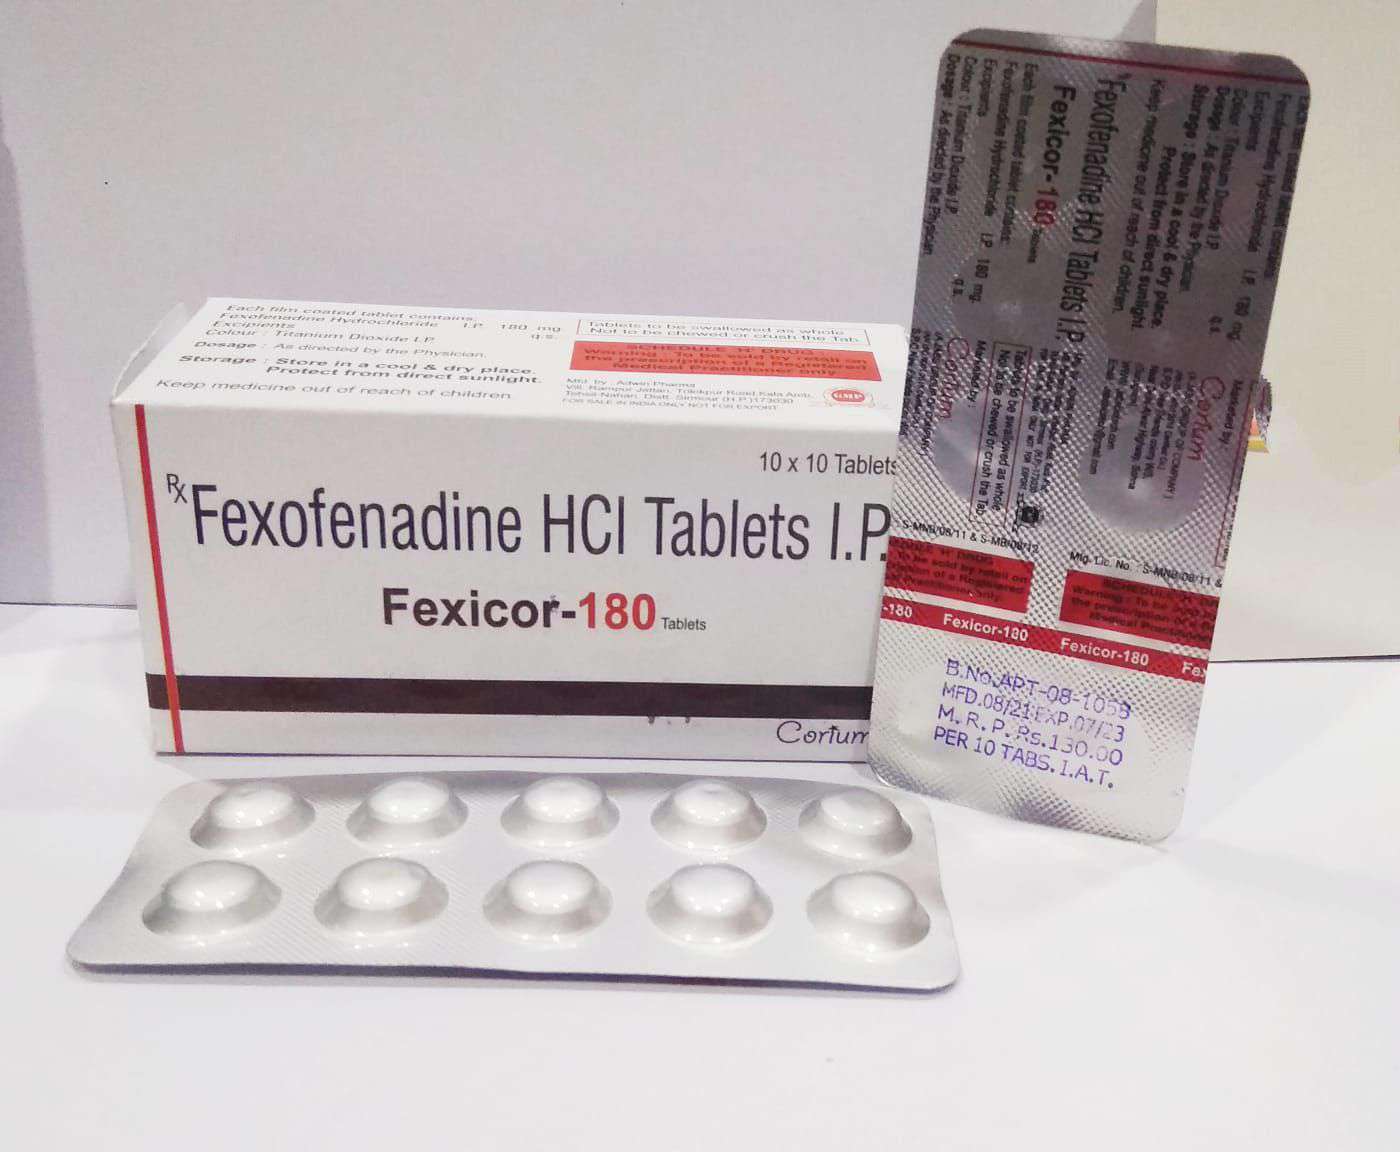 fexofenadine hydrochloride tablets i.p